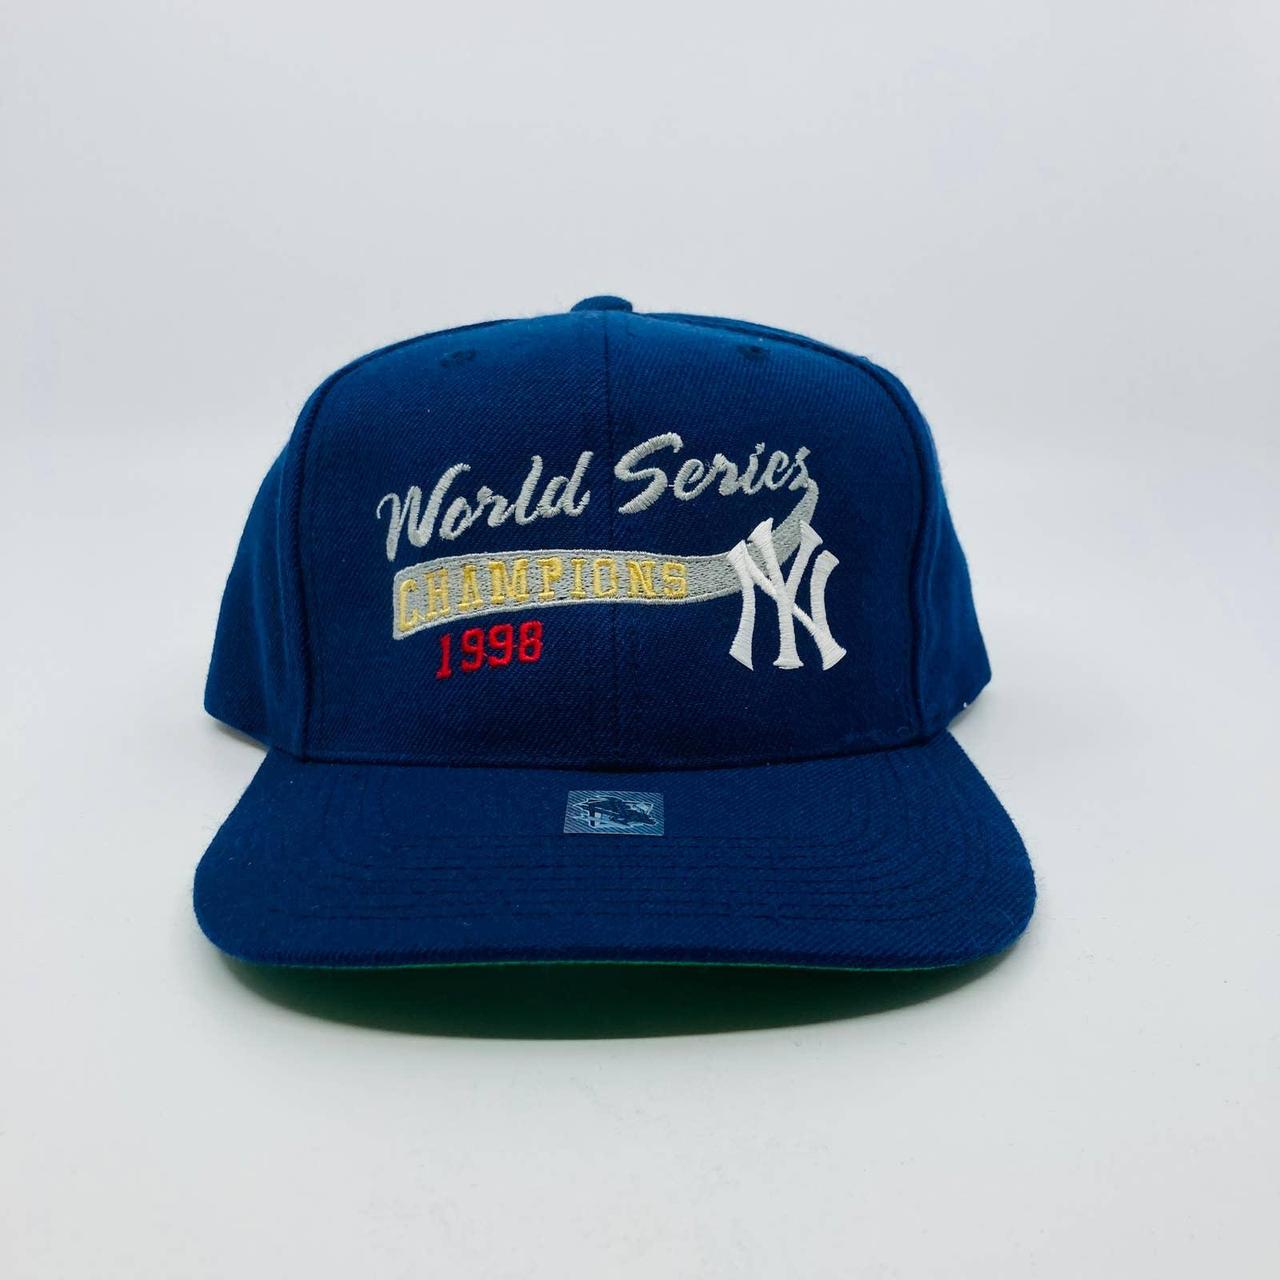 Sports Specialties Men's Hat - Blue